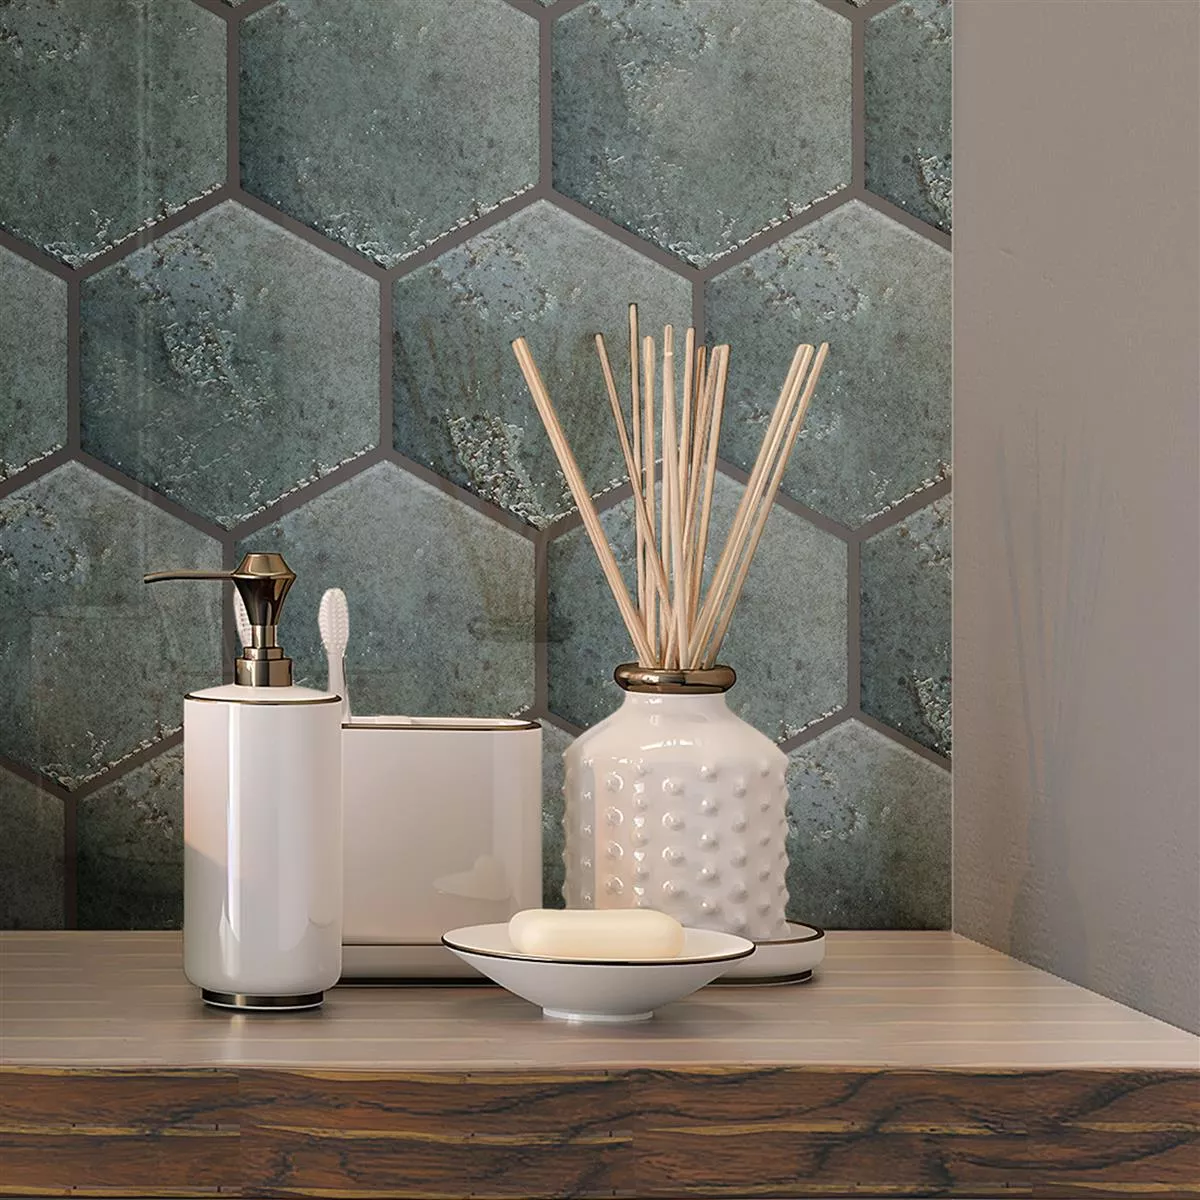 Wall Tiles Lara Glossy Waved 13x15cm Hexagon Grey